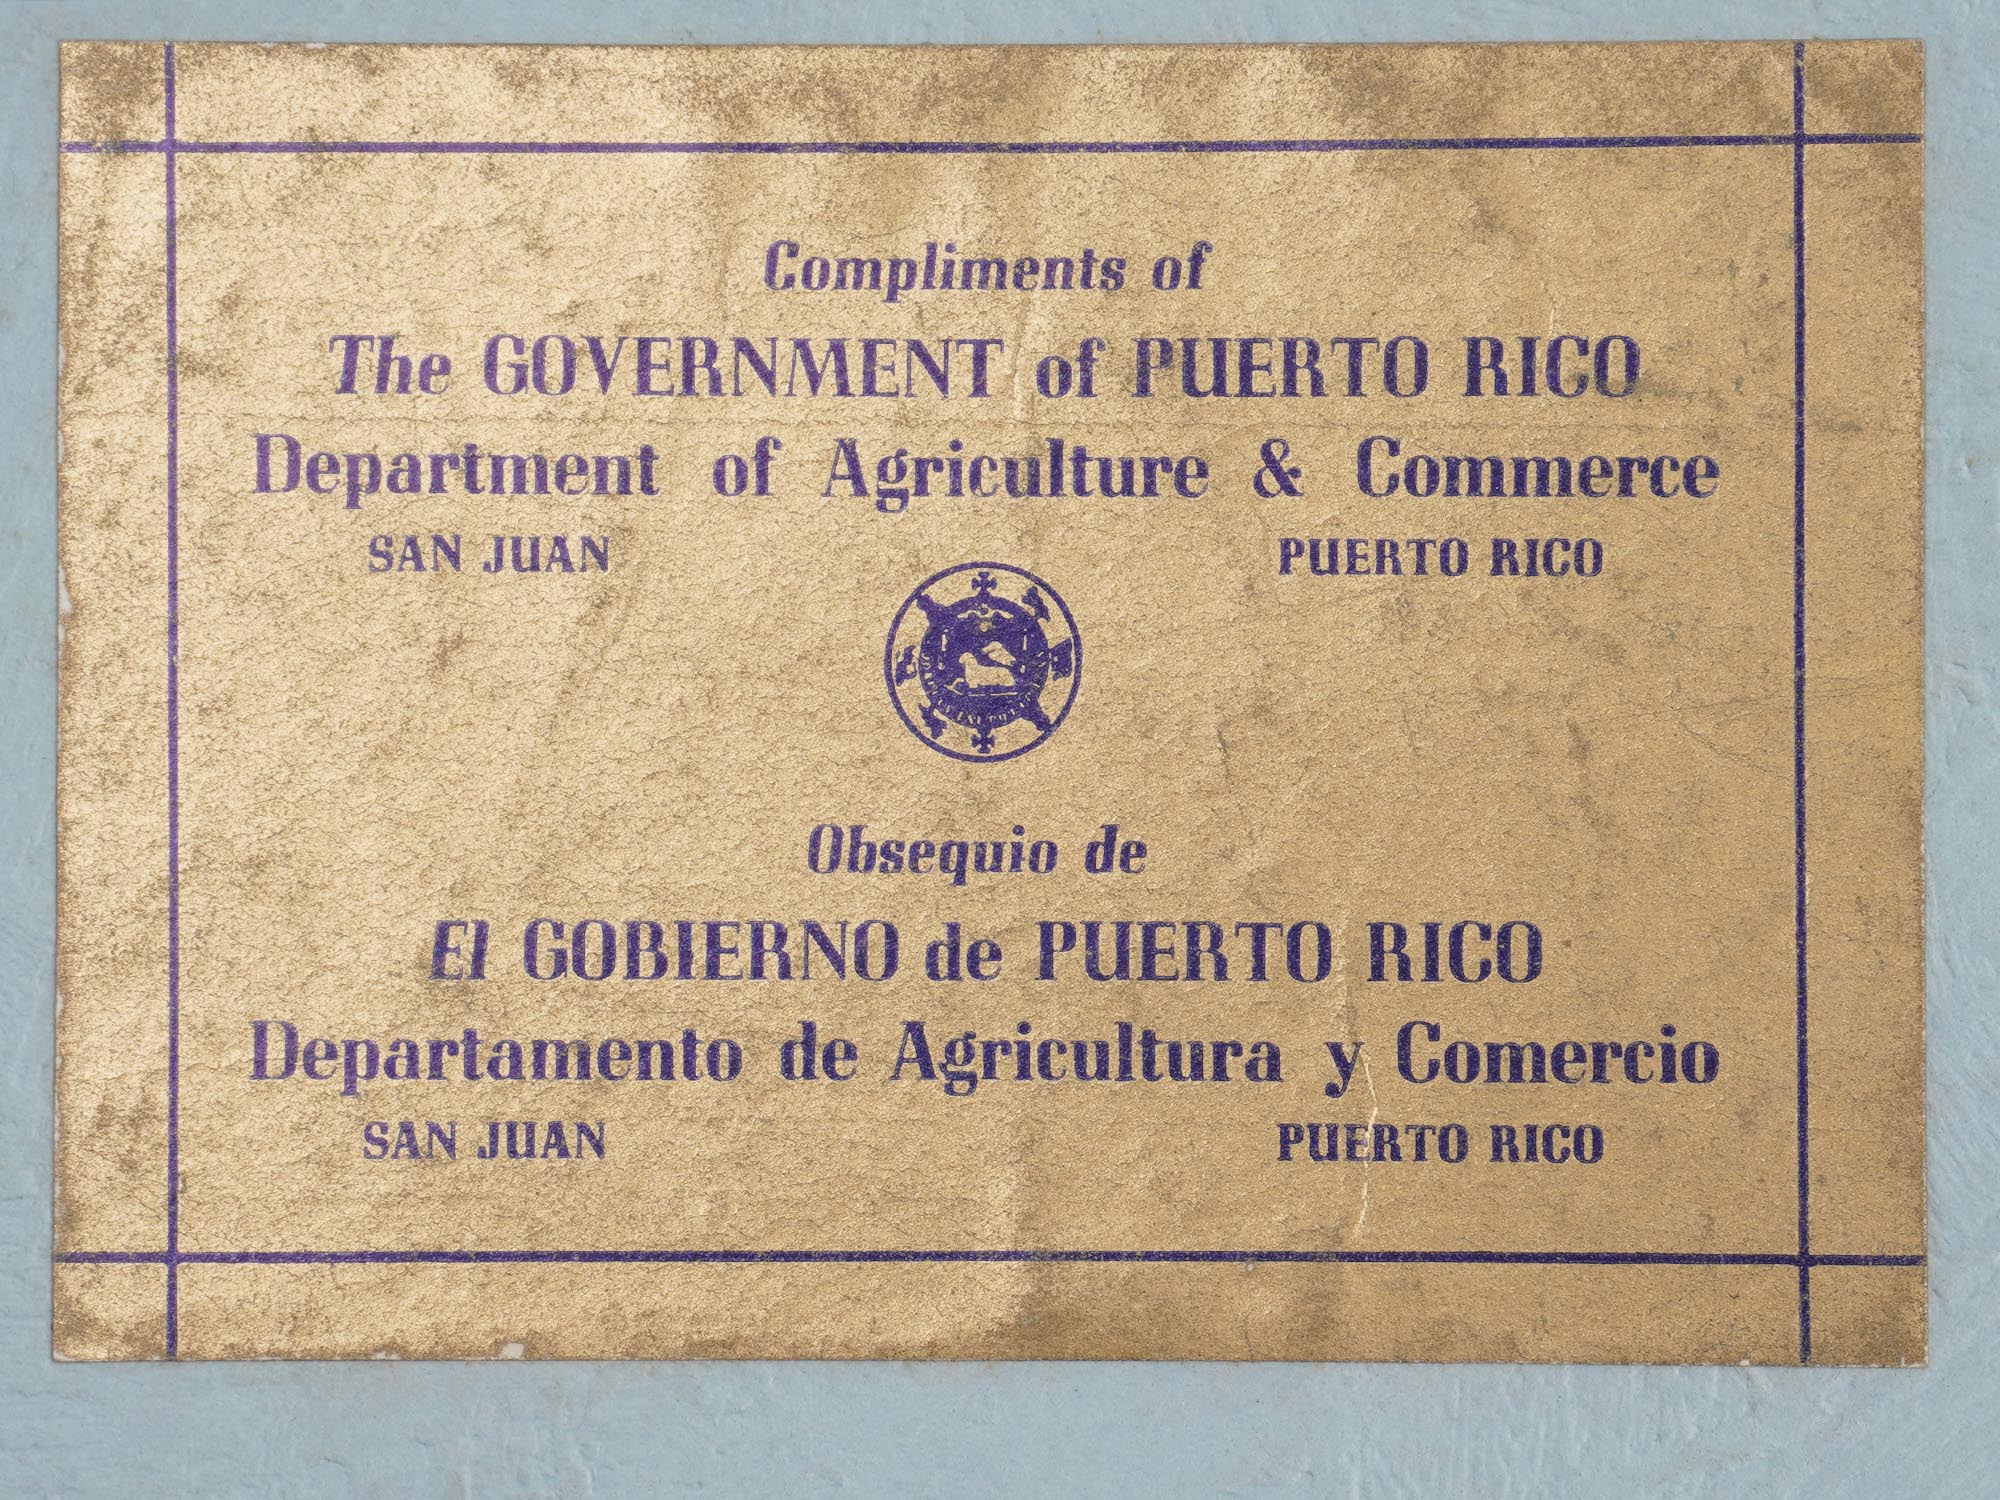 VINTAGE BOOK GOLDEN ALBUM OF PUERTO RICO PHOTOS PIC-11